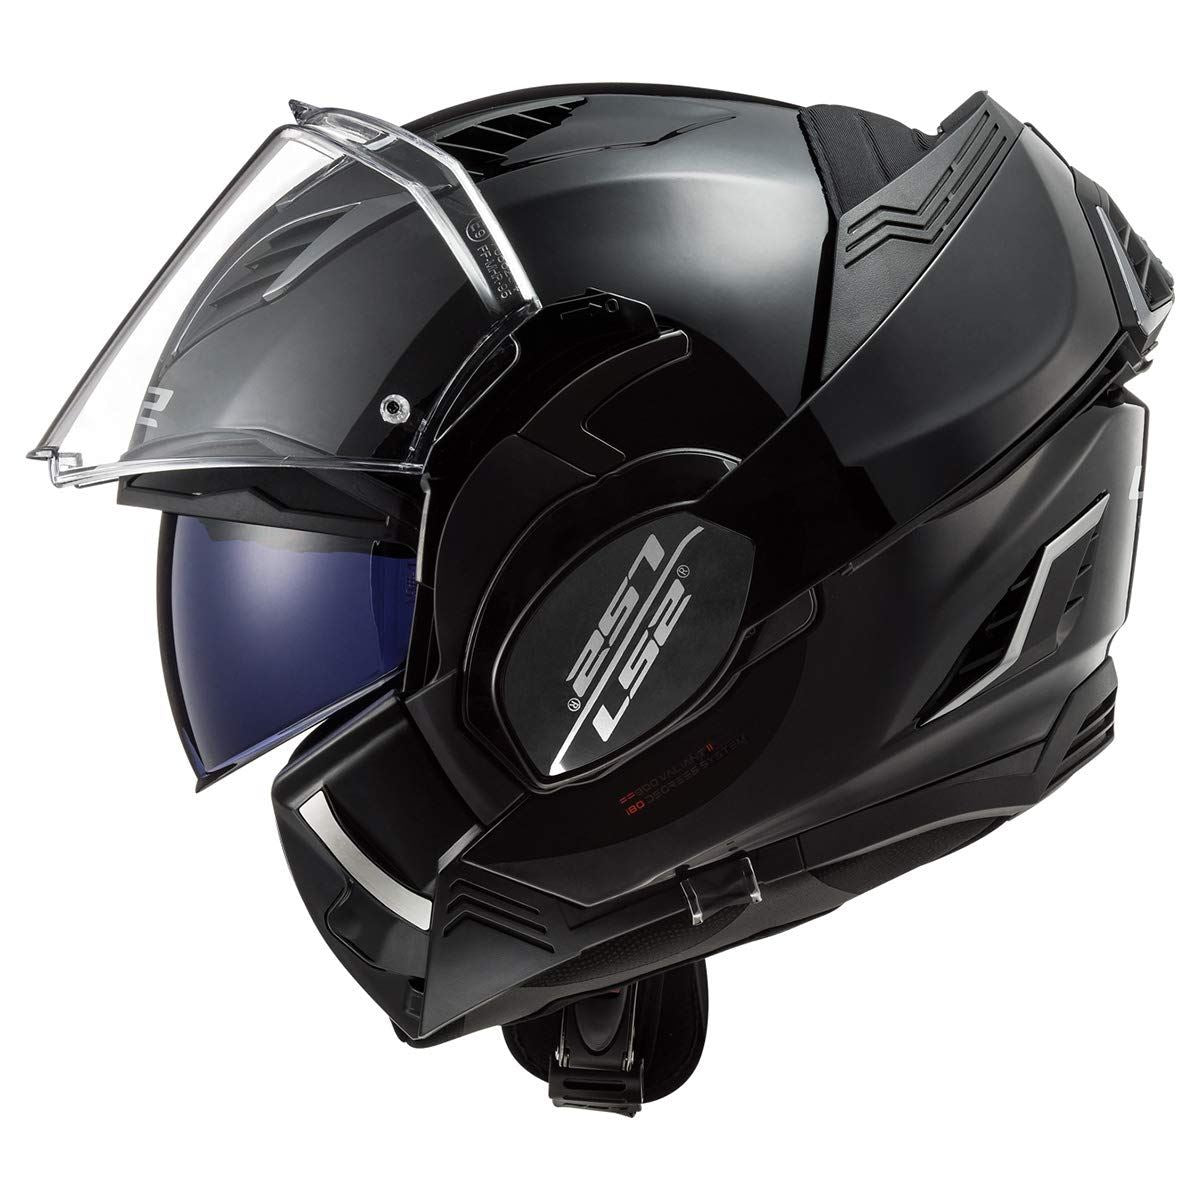 LS2 - Valiant II Modular Helmets